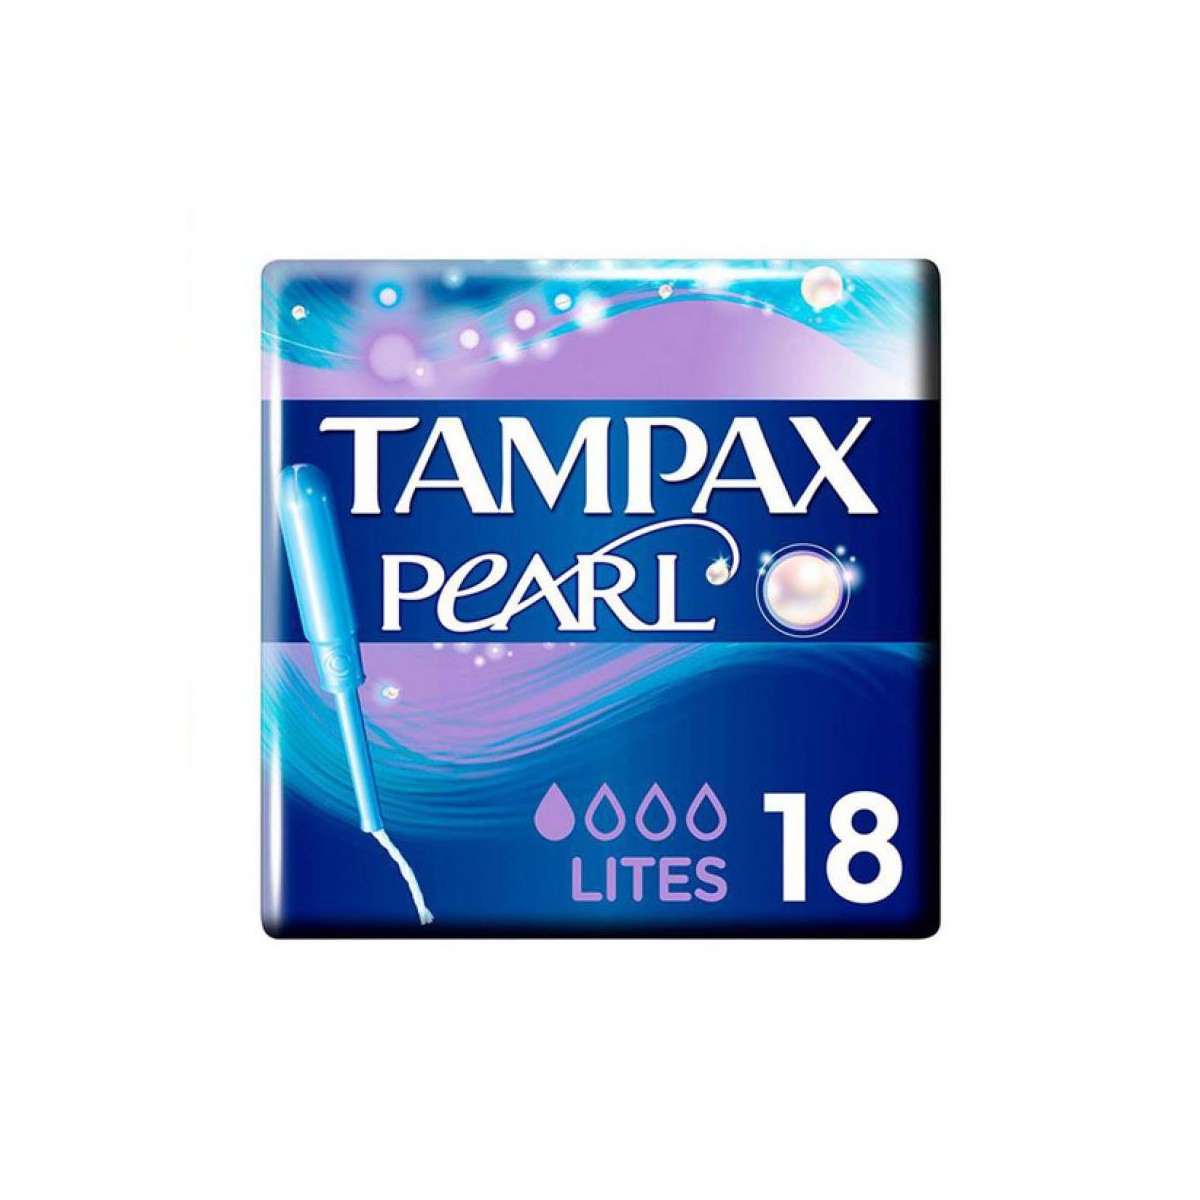 Tampax Pearl Lites 18 unidades